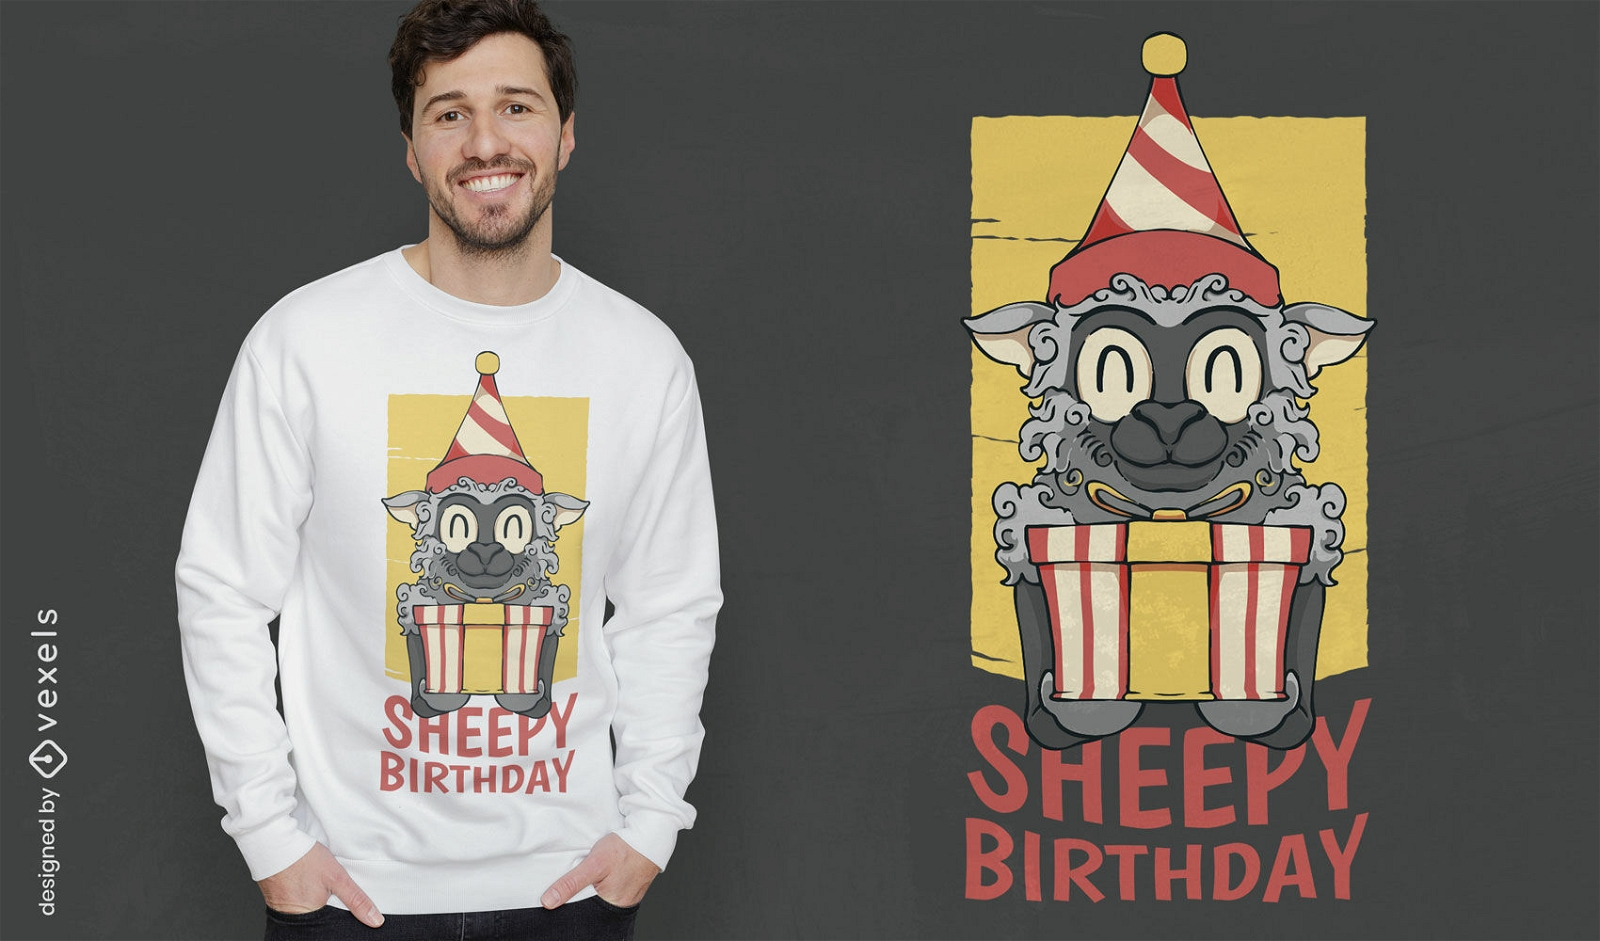 Birthday sheep animal t-shirt design